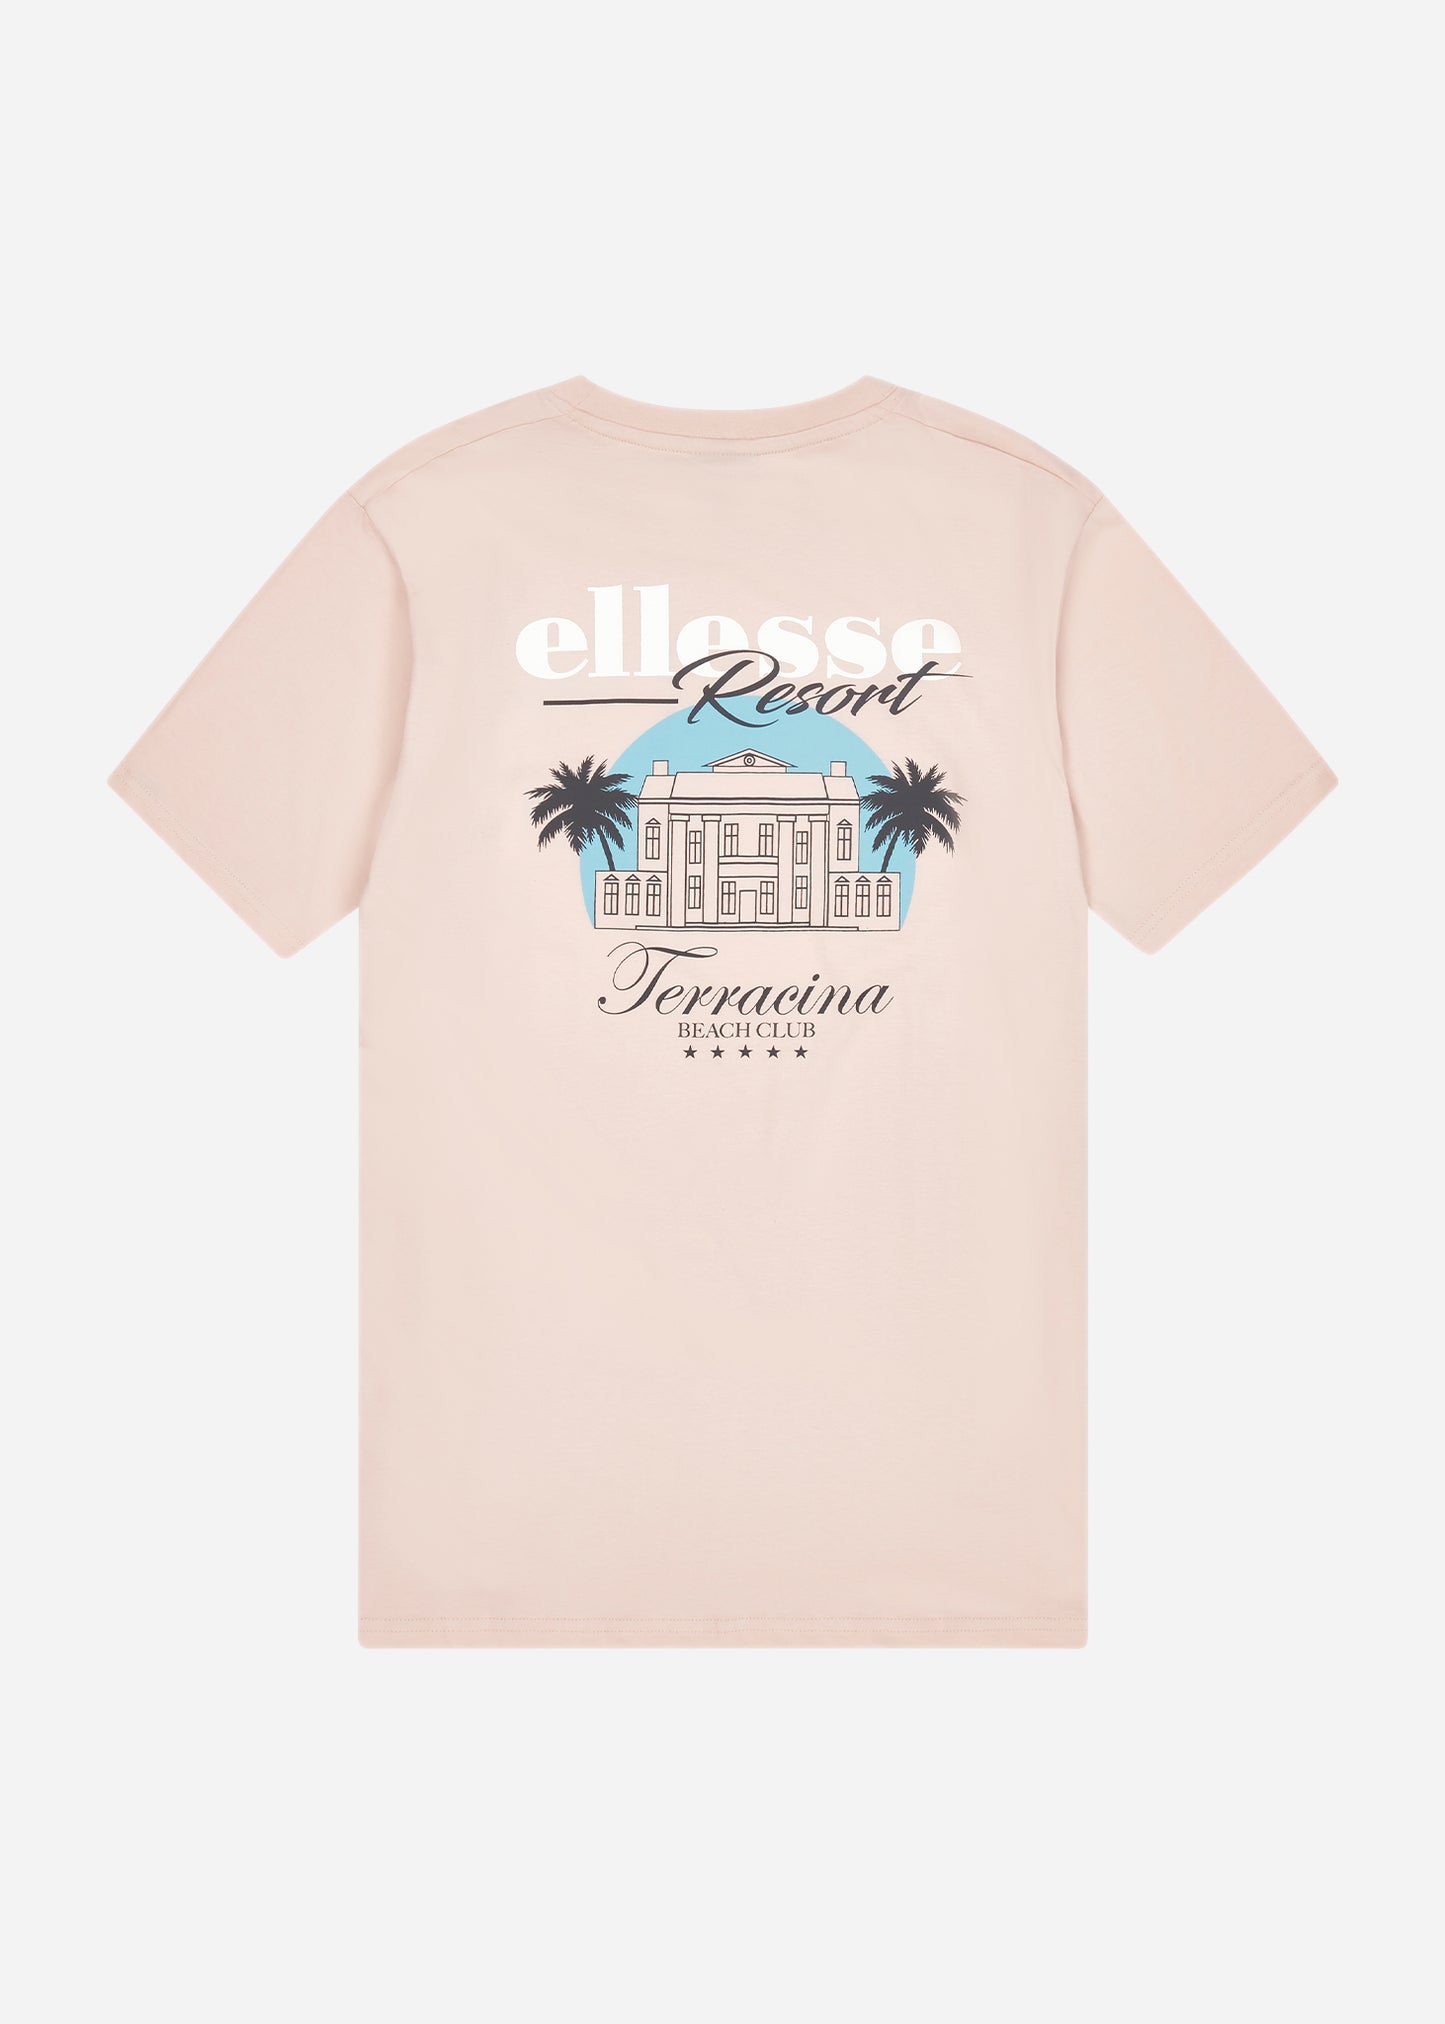 Ellesse T-shirts  Drevino tee - light pink 